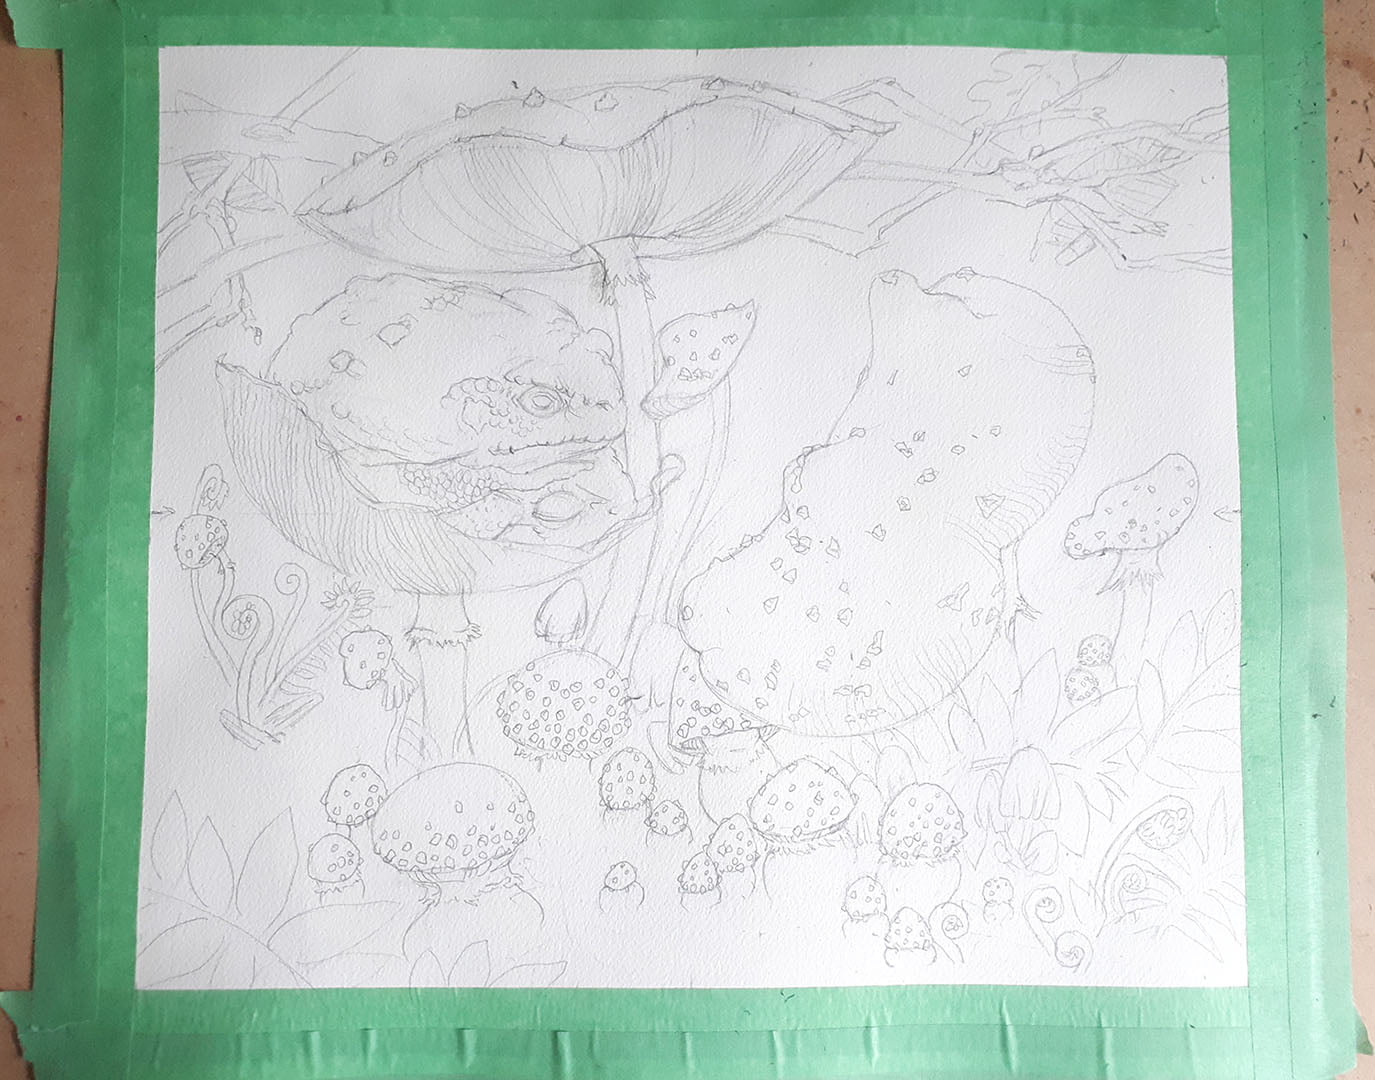 Work in Progress - Toads on Toad Stools watercolor painting by Karolina Szablewska